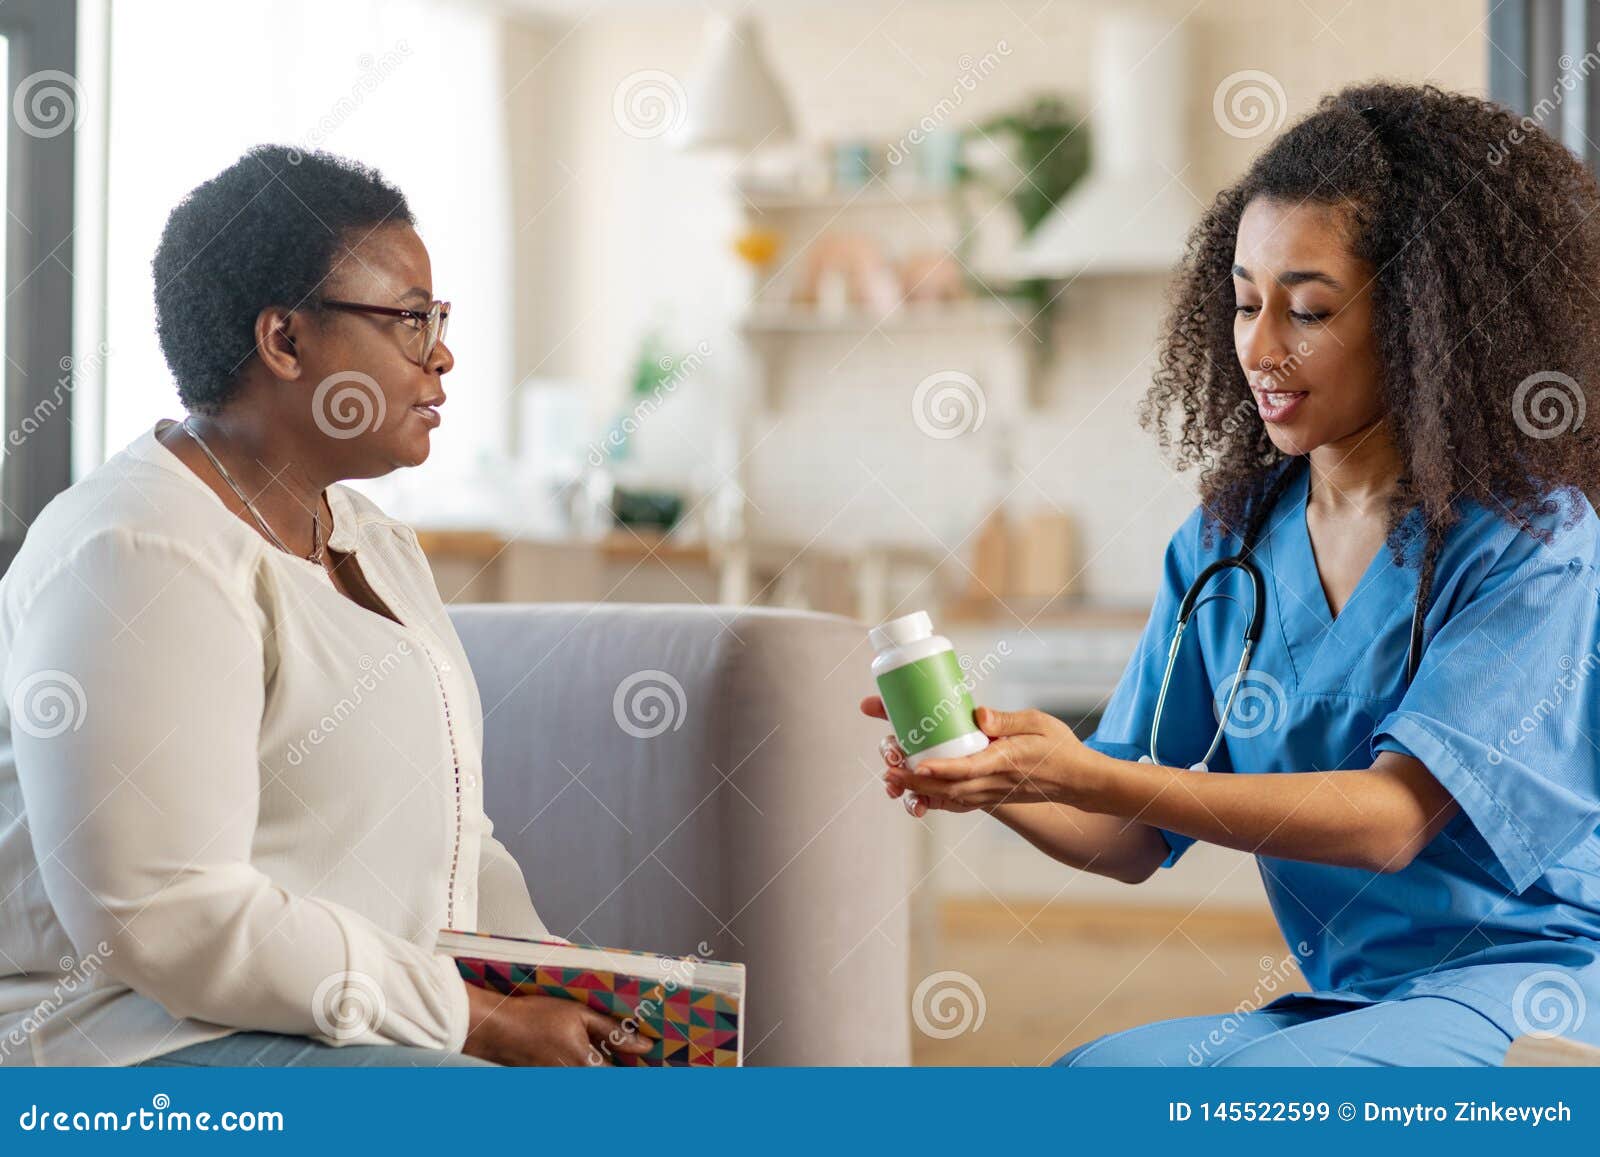 Dark Skinned Woman With Short Hair Talking To Nurse Bringing